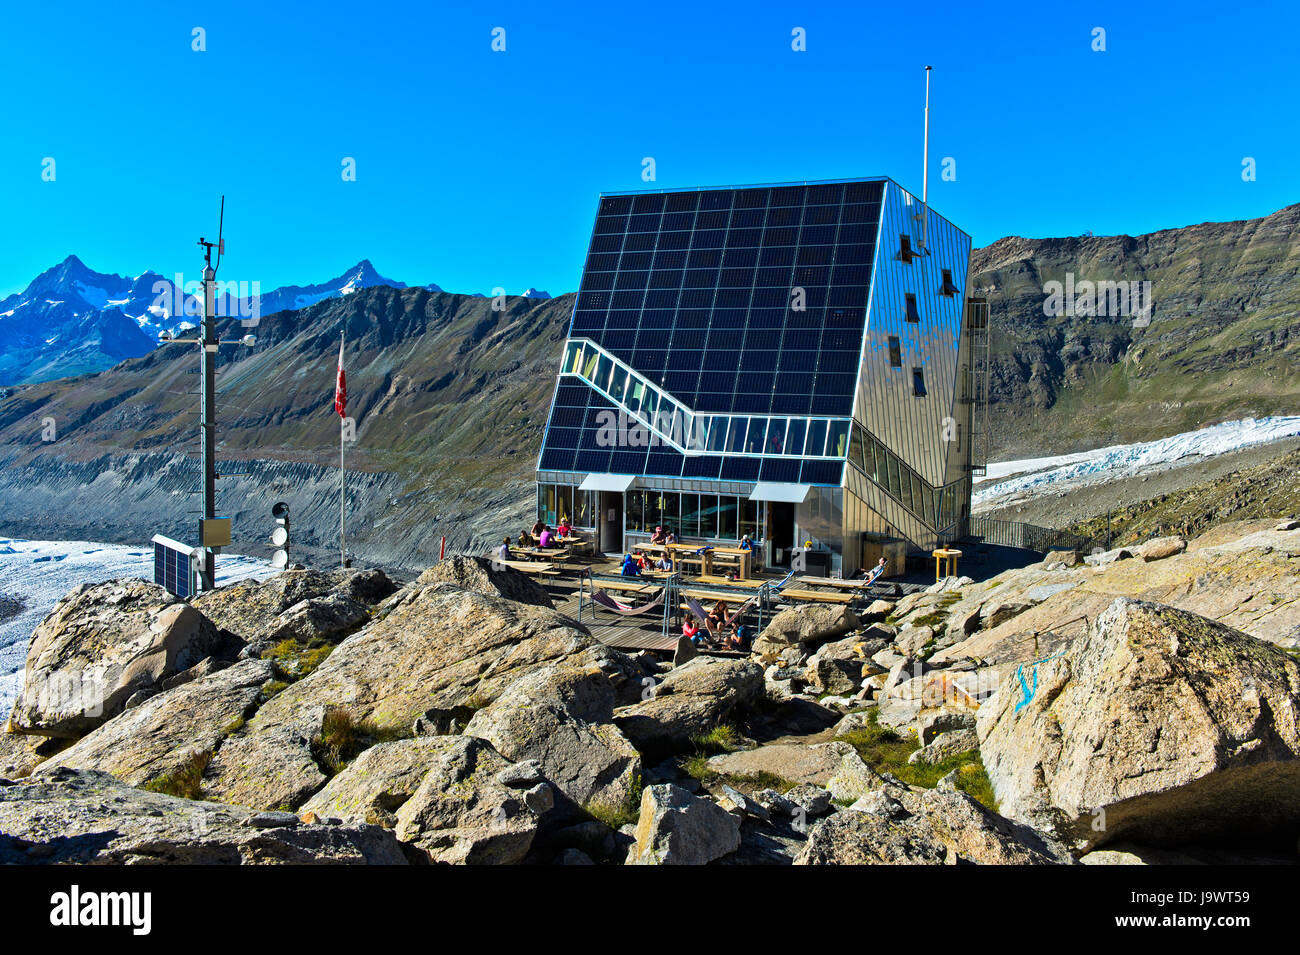 Modern alpine hut switzerland hi-res stock photography and images - Alamy